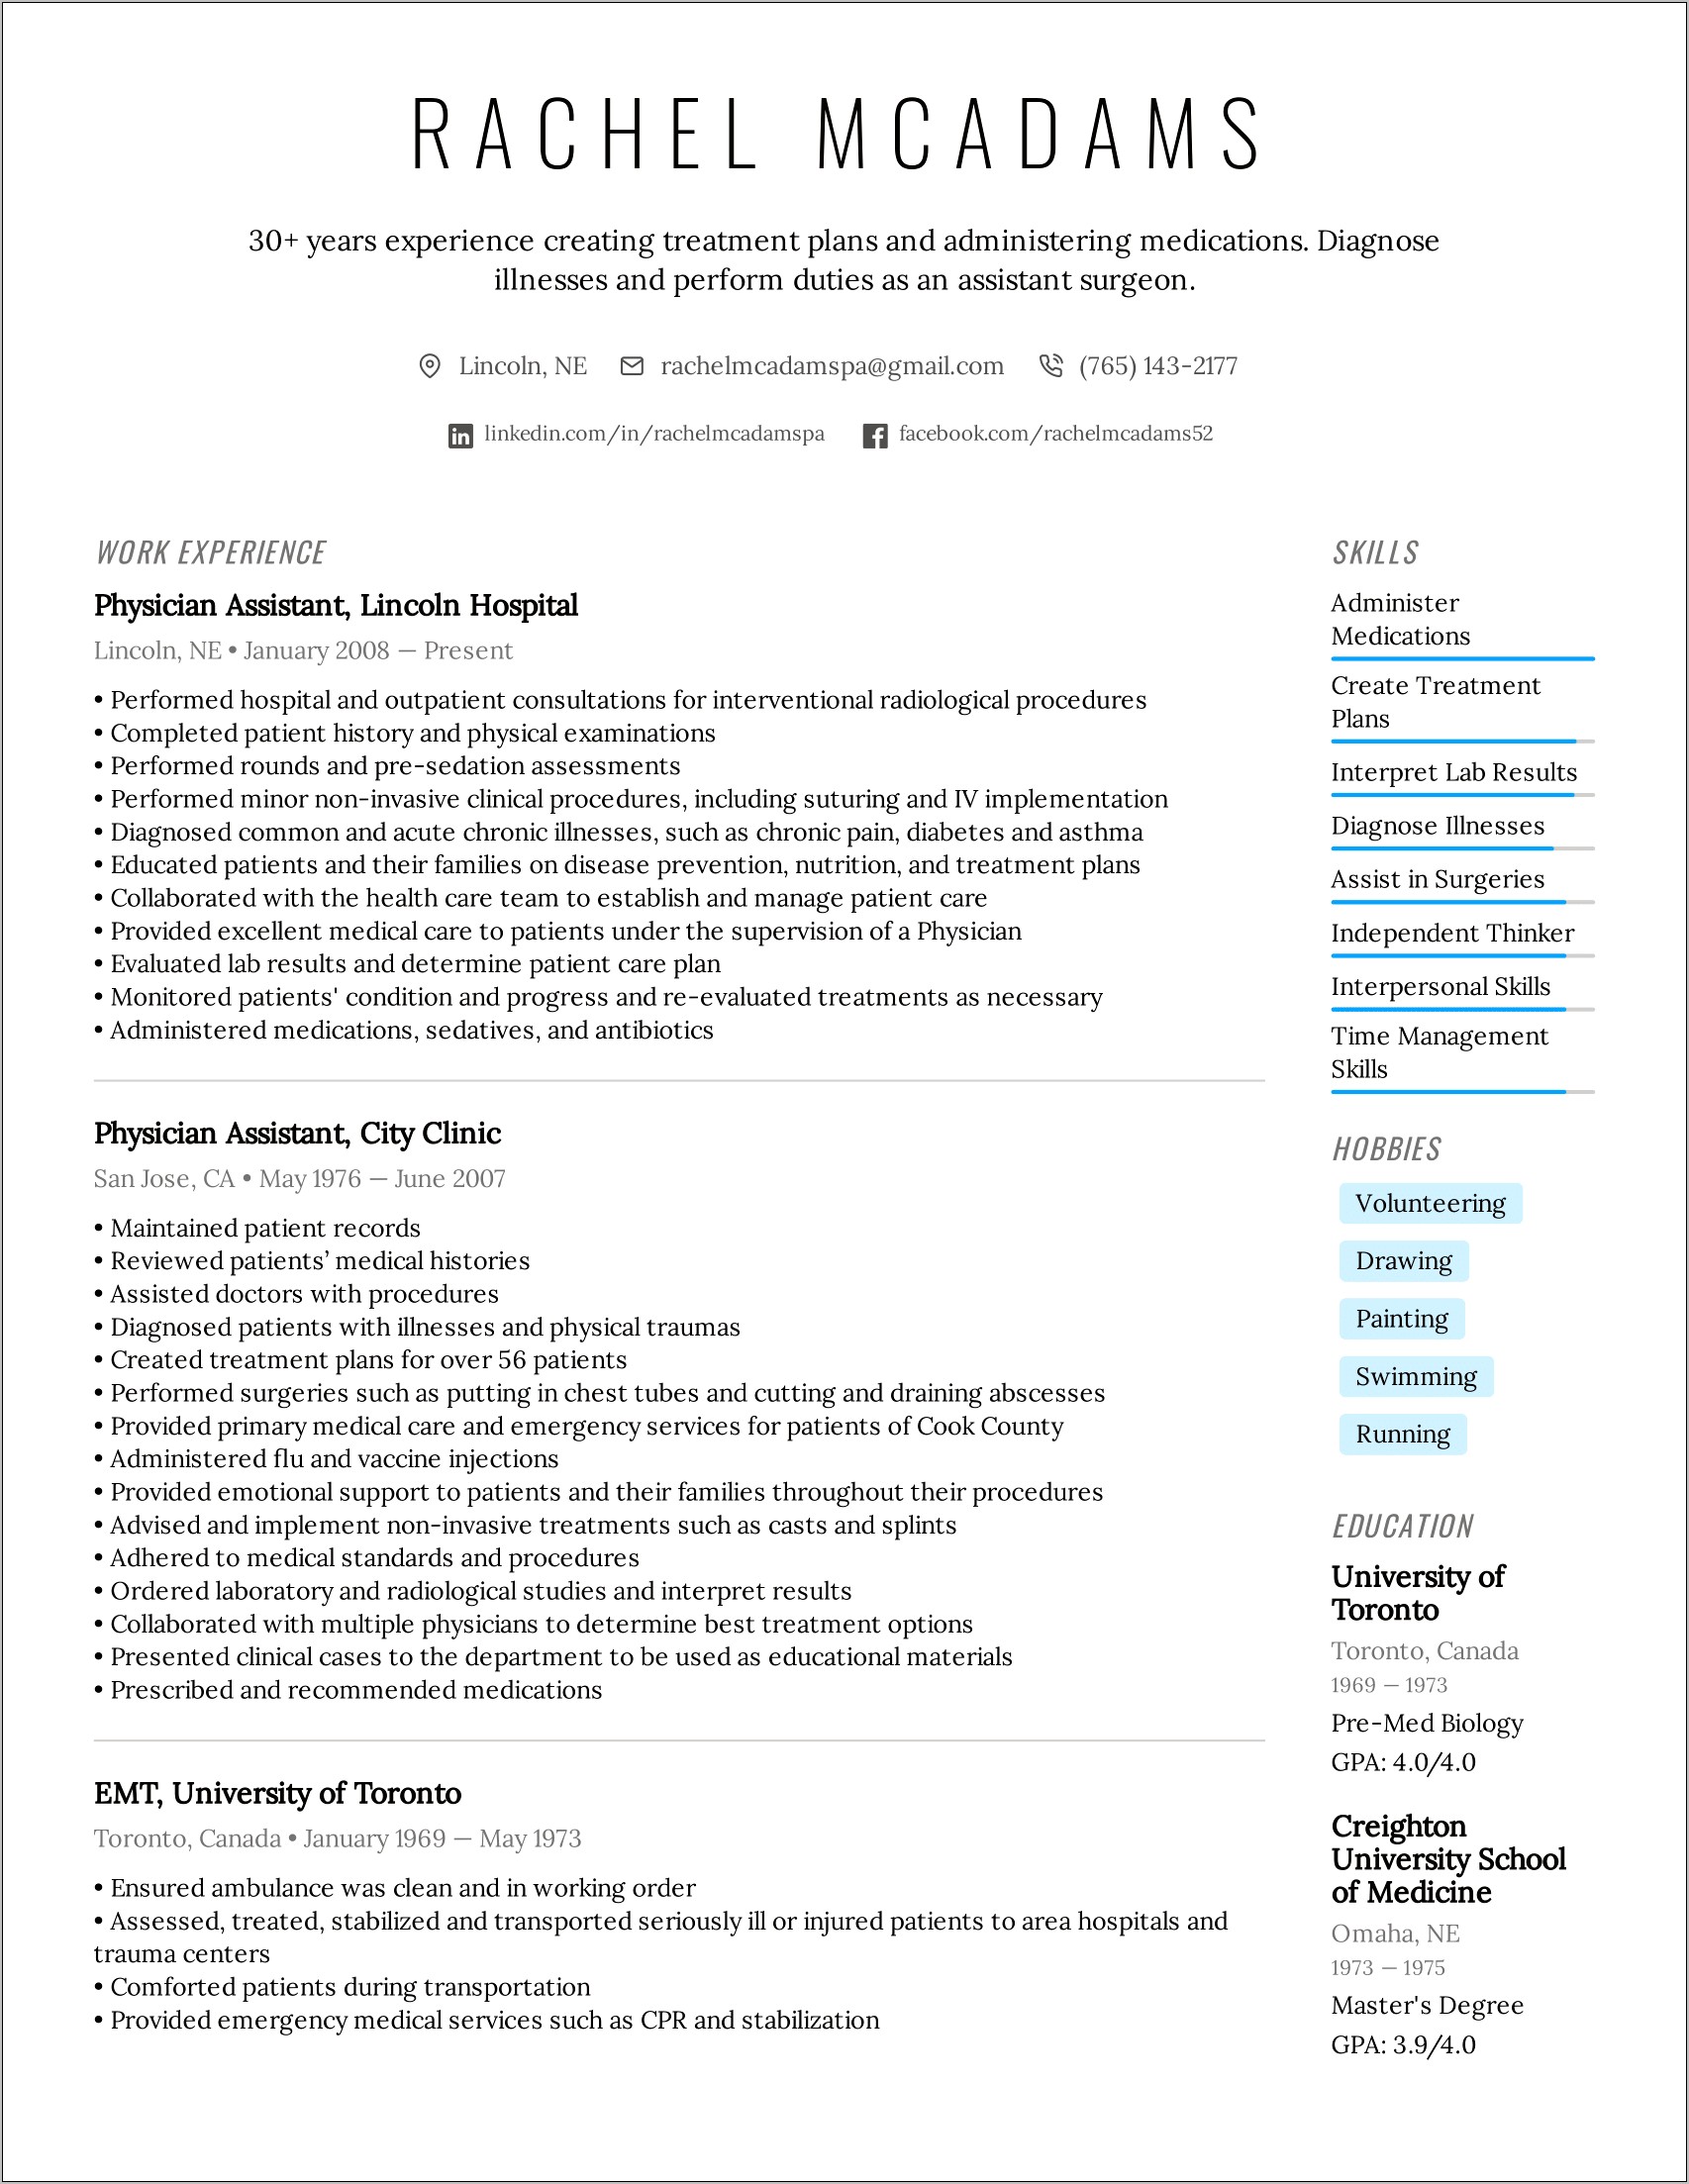 Resume Job Description For Trauma Technician